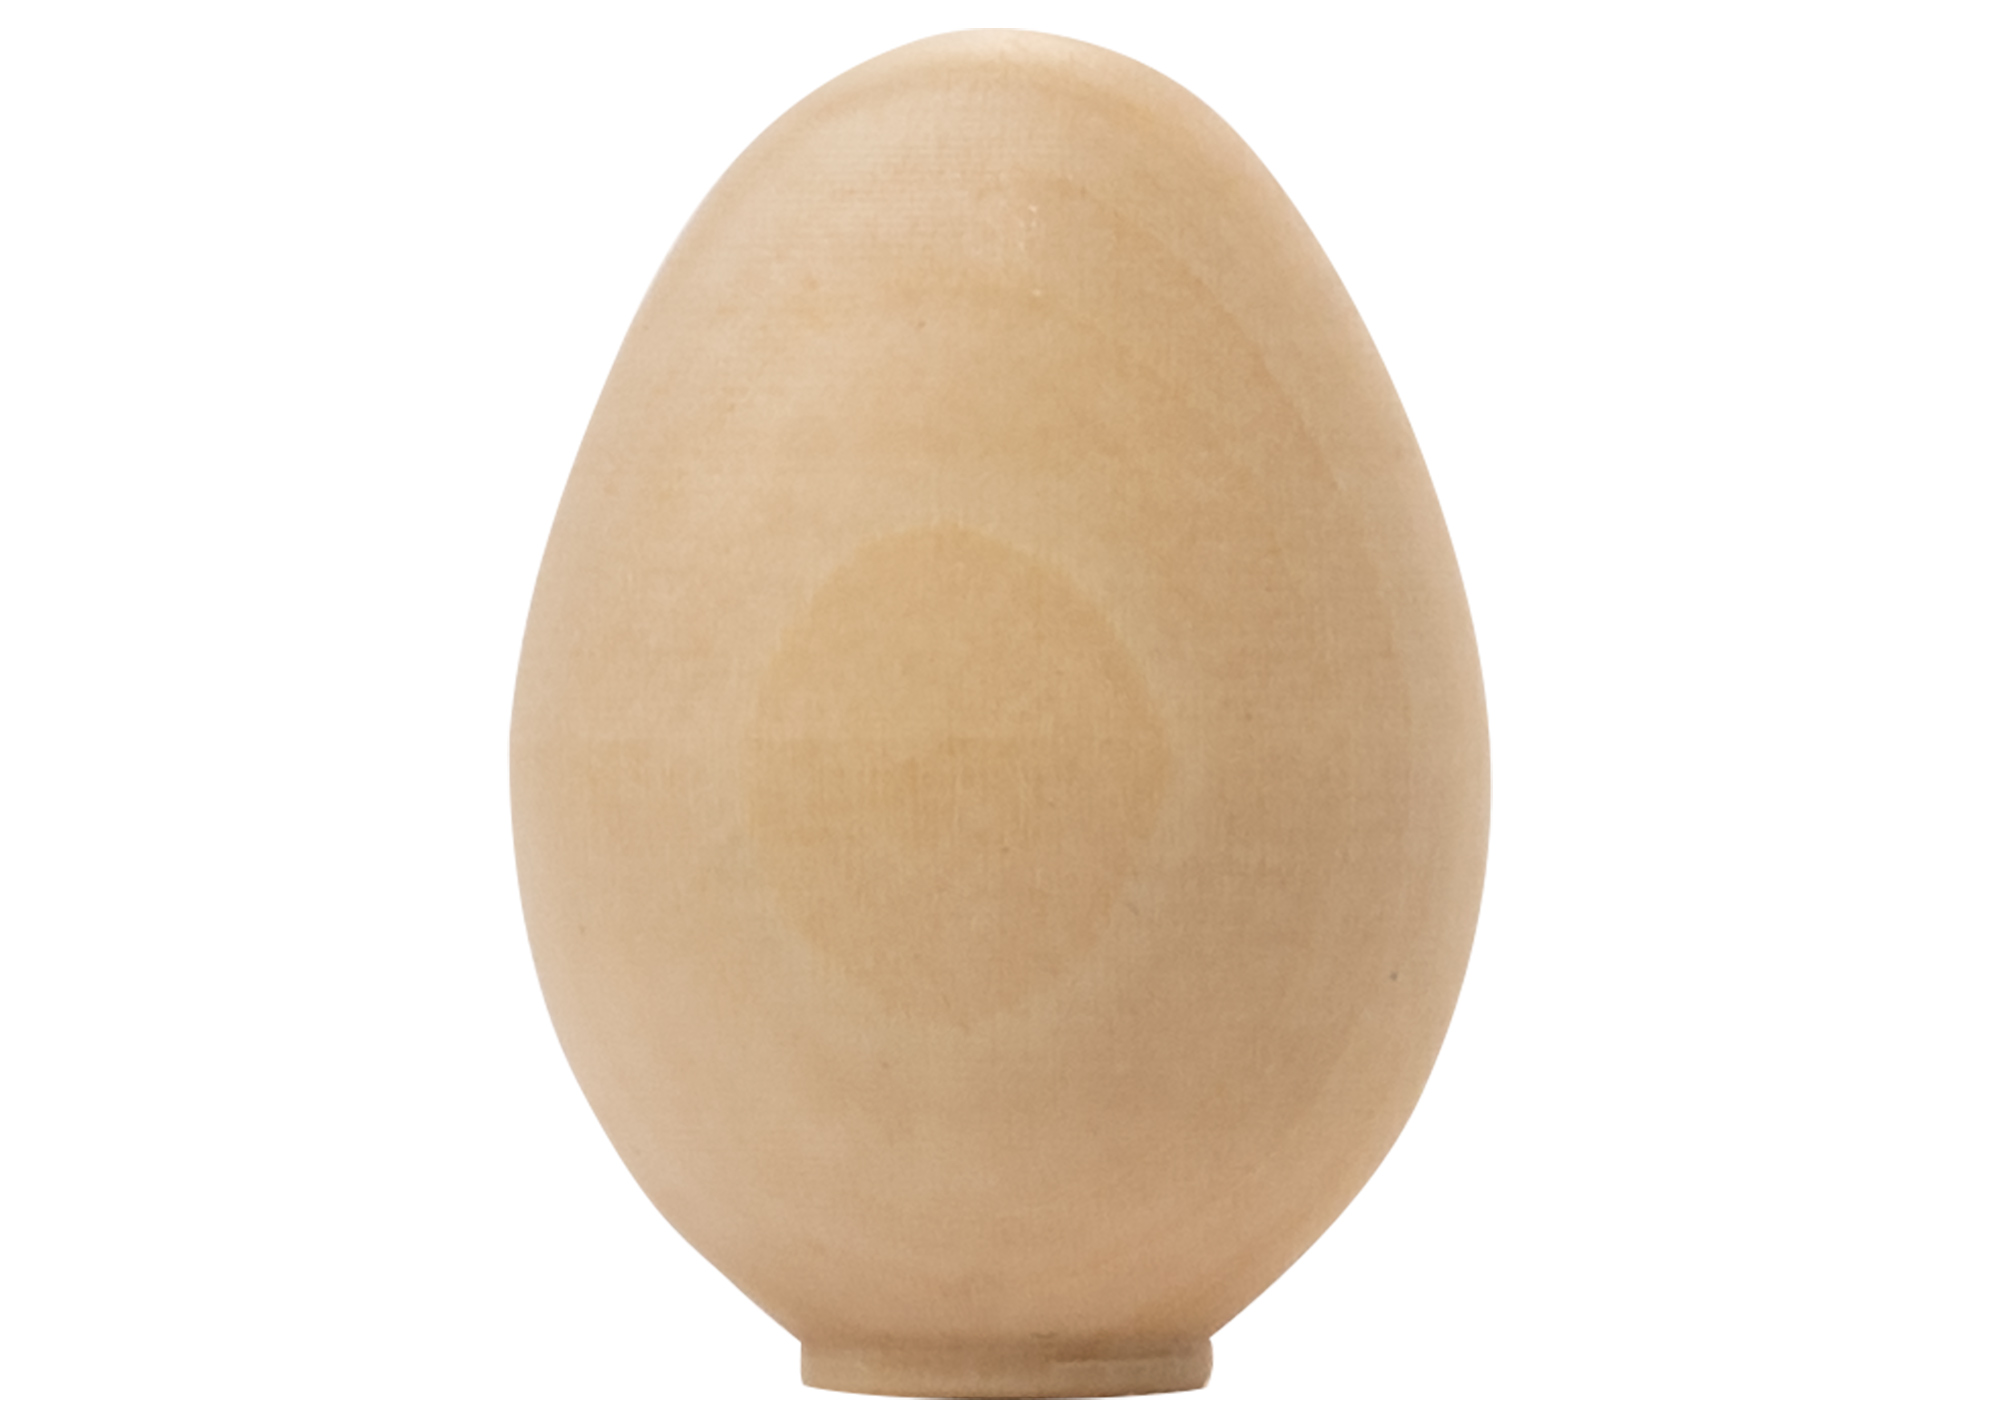 Buy Unpainted Wooden Bird Egg 1.25" at GoldenCockerel.com